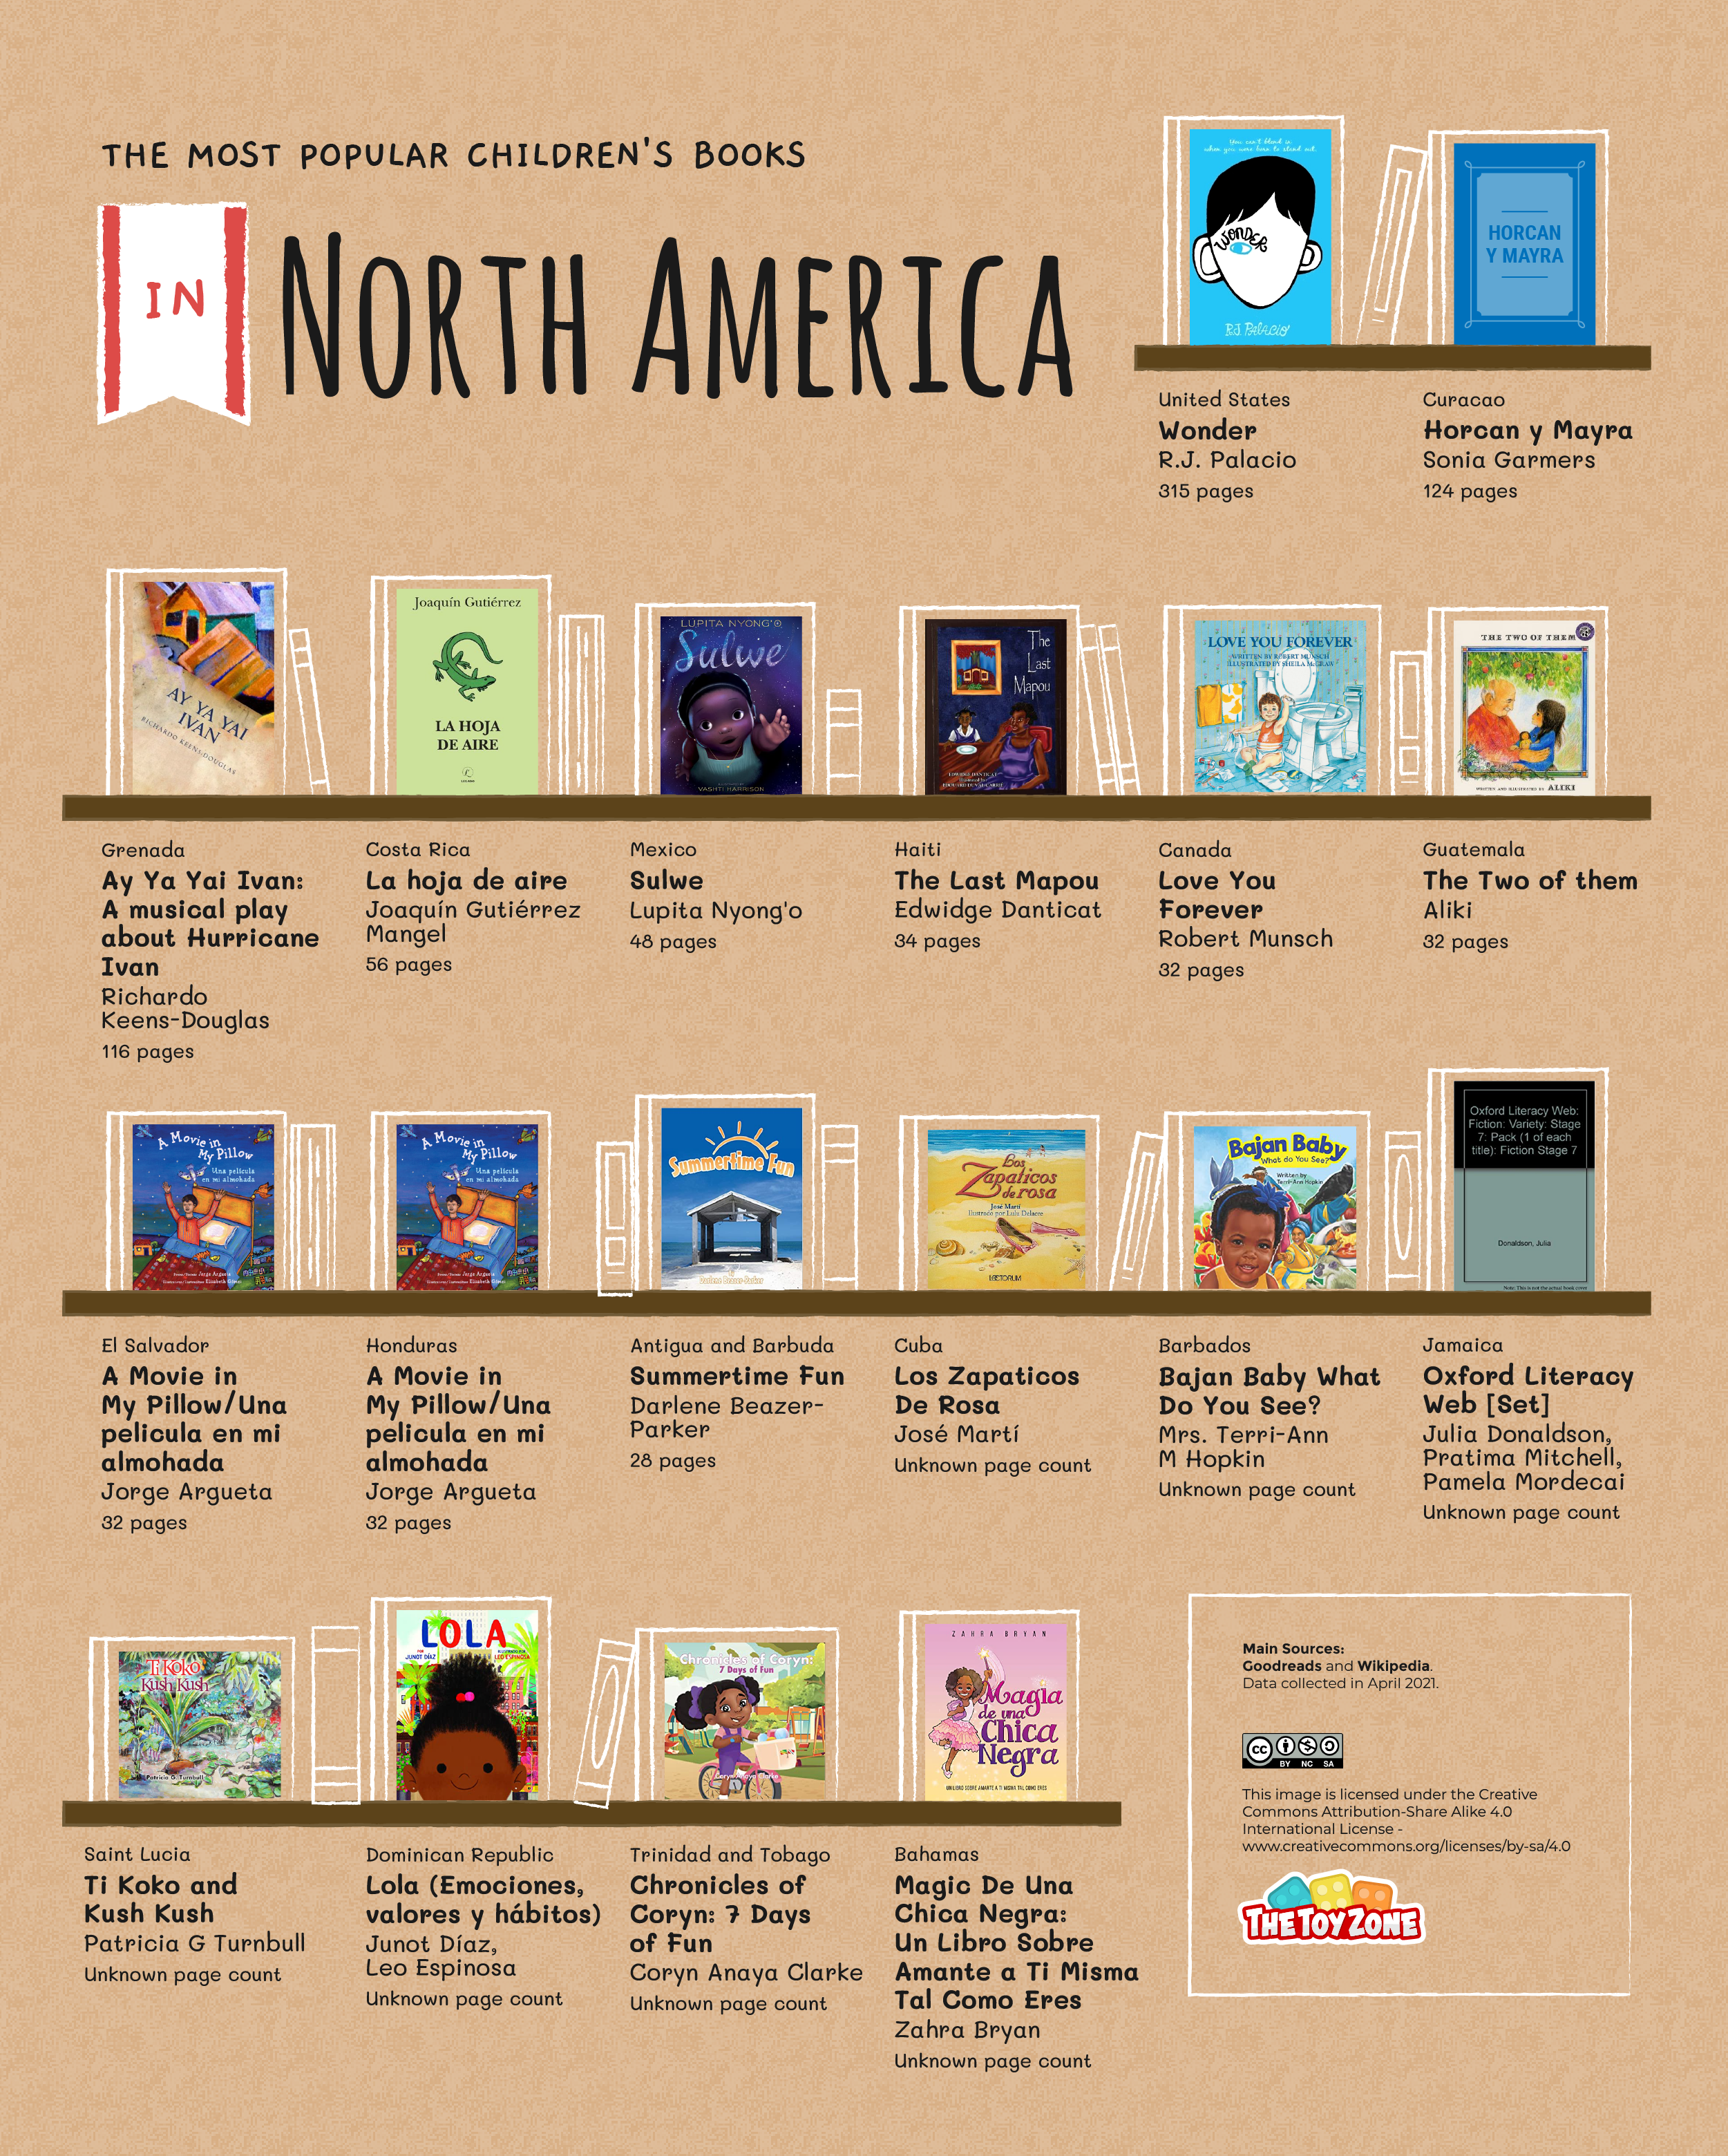 Bookshelf graphic of most popular children's books in North America